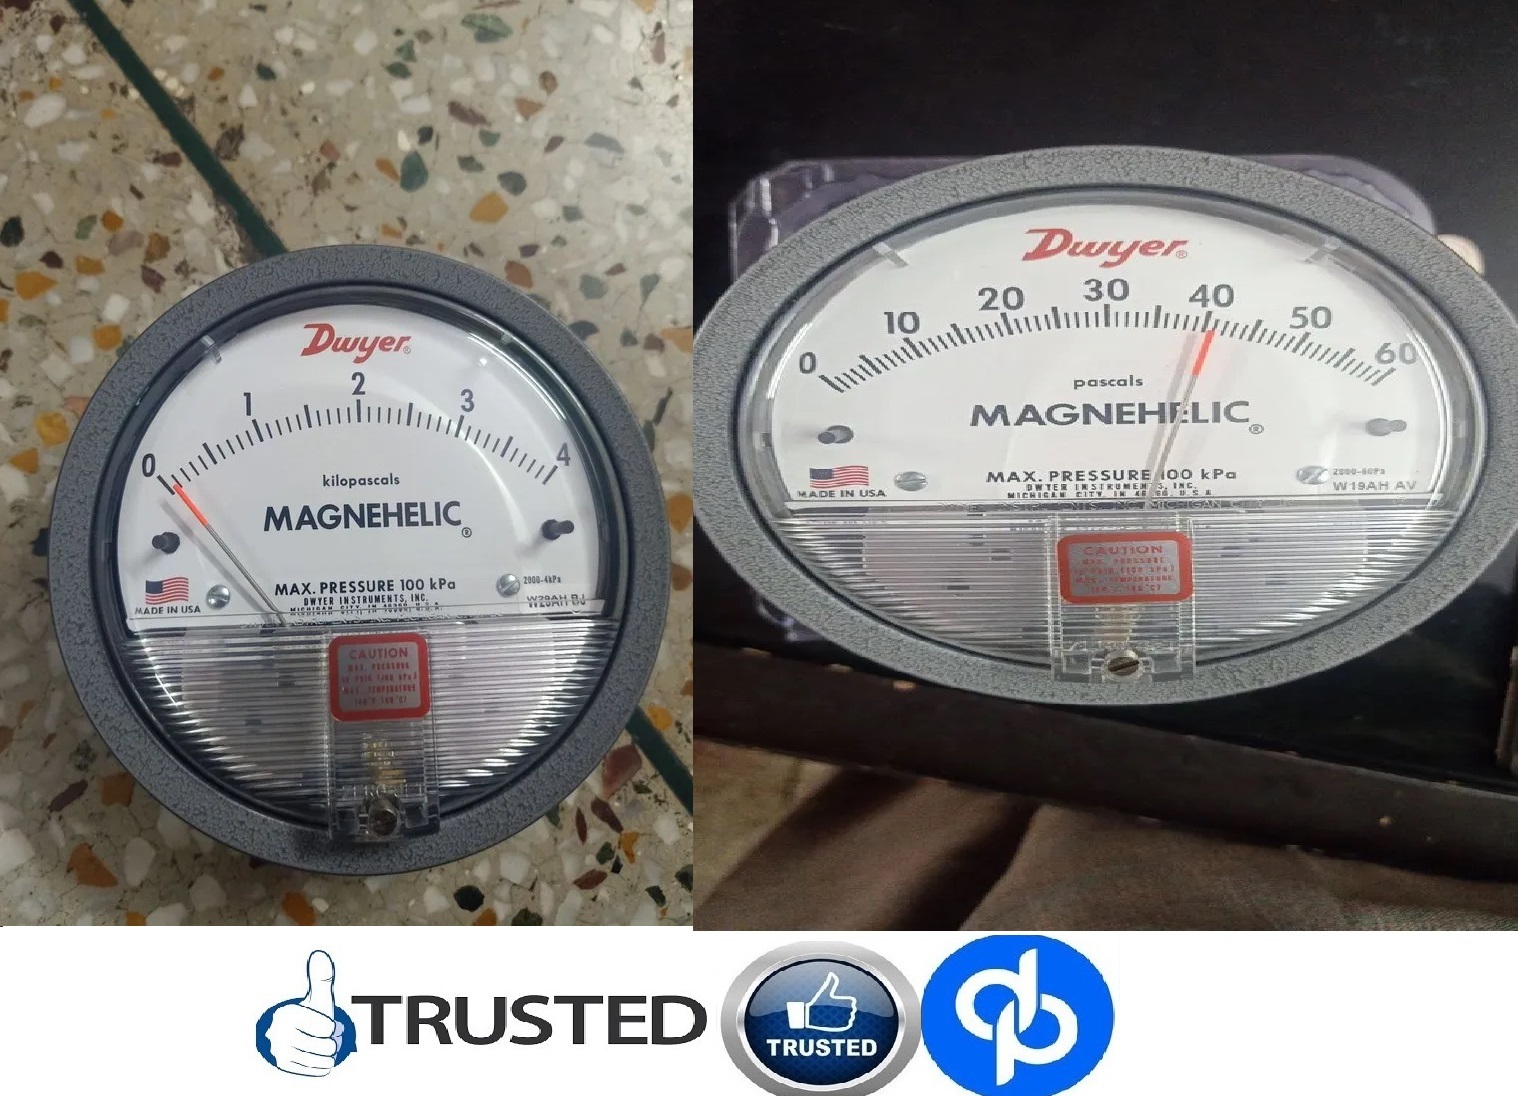 Dwyer Maghnehic gauges by Nahan Himachal Pradesh